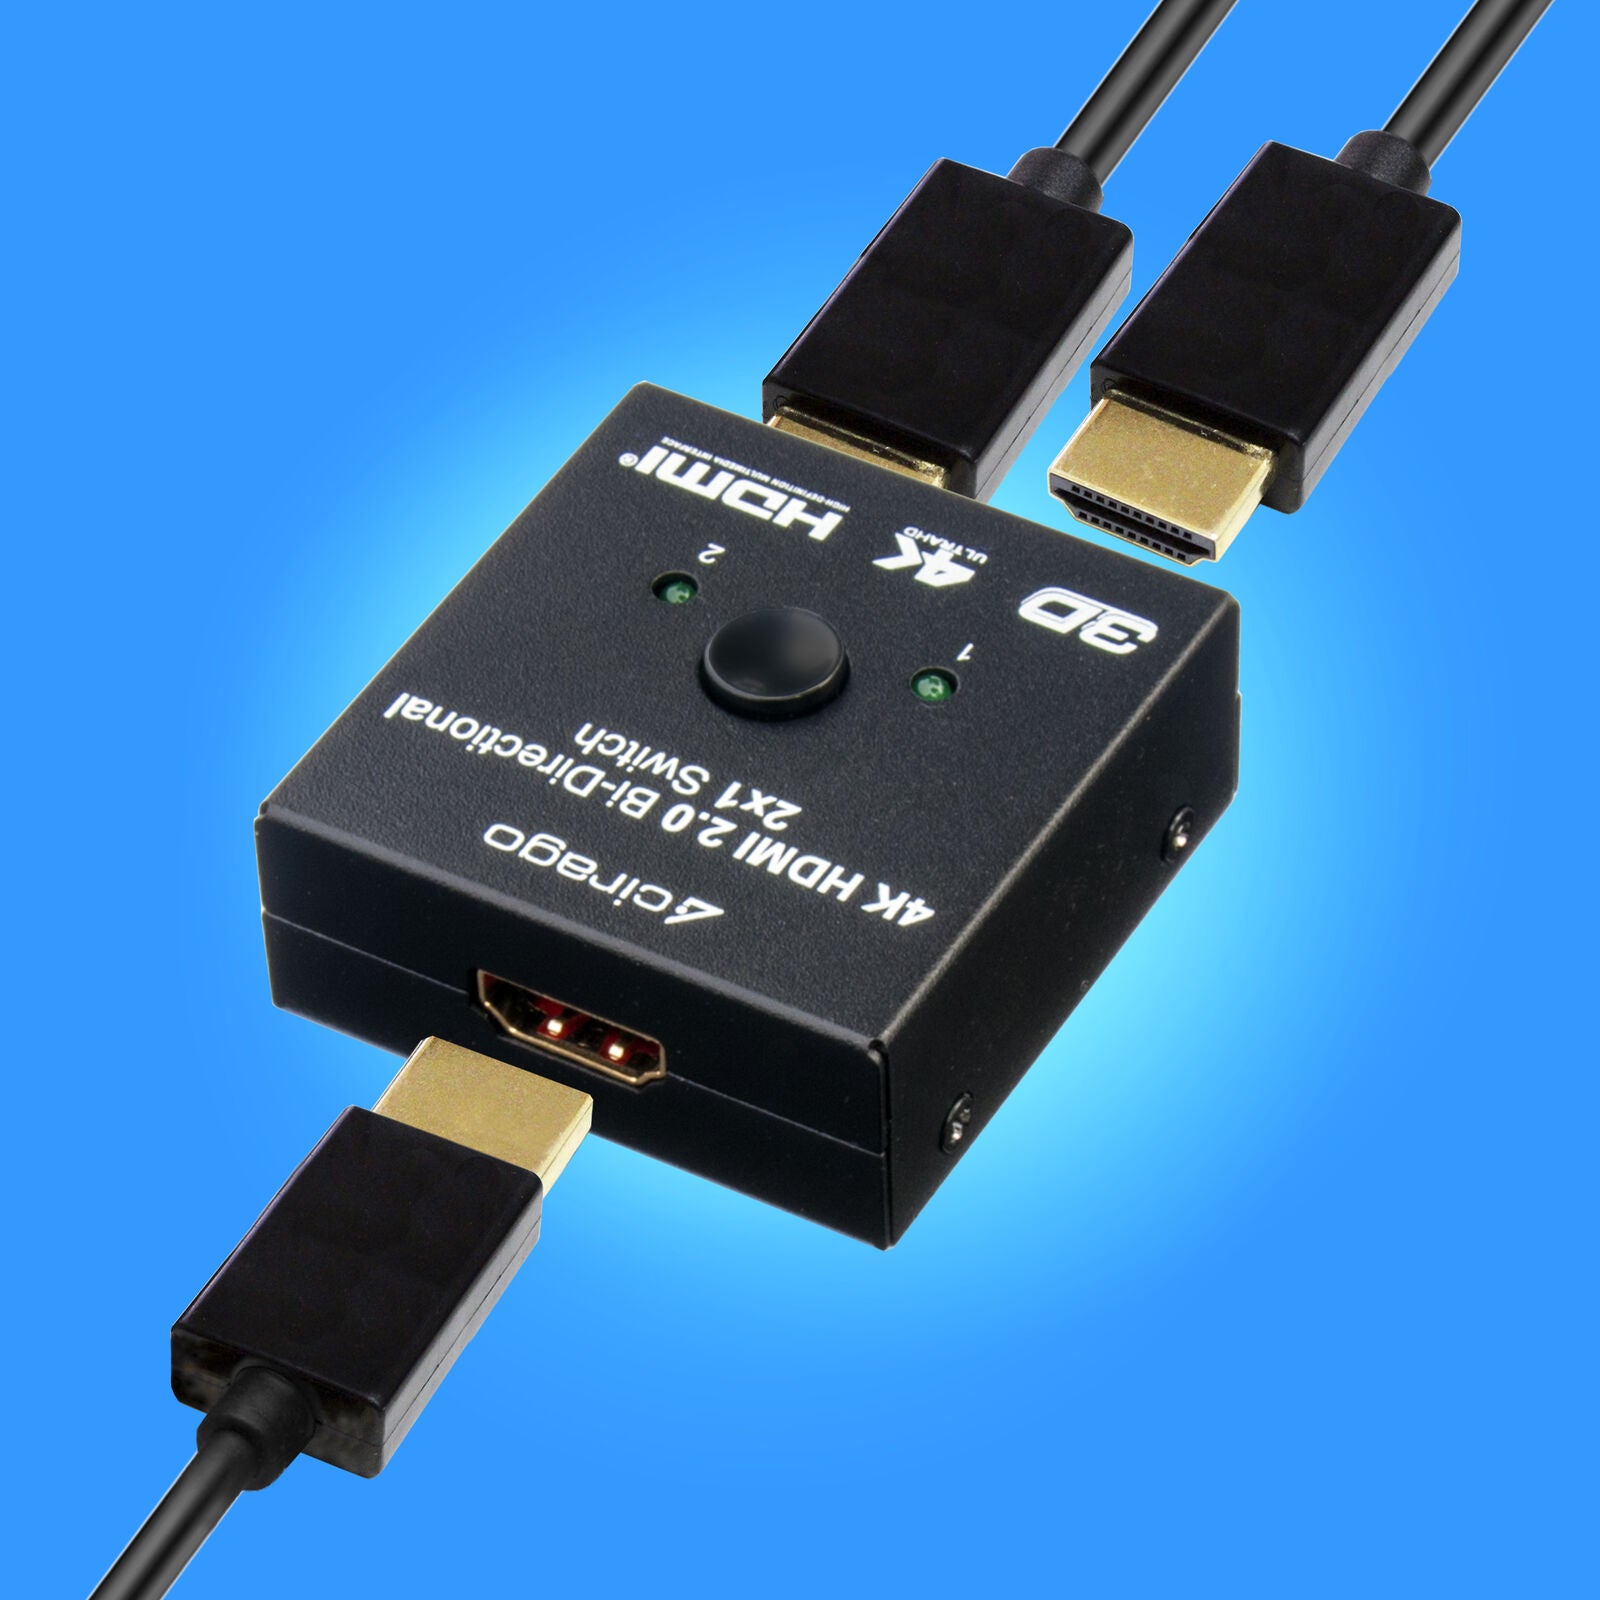 Cirago 4K Bi-Directional HDMI 2.0 HDCP 2x1 Switch Splitter Plug and play